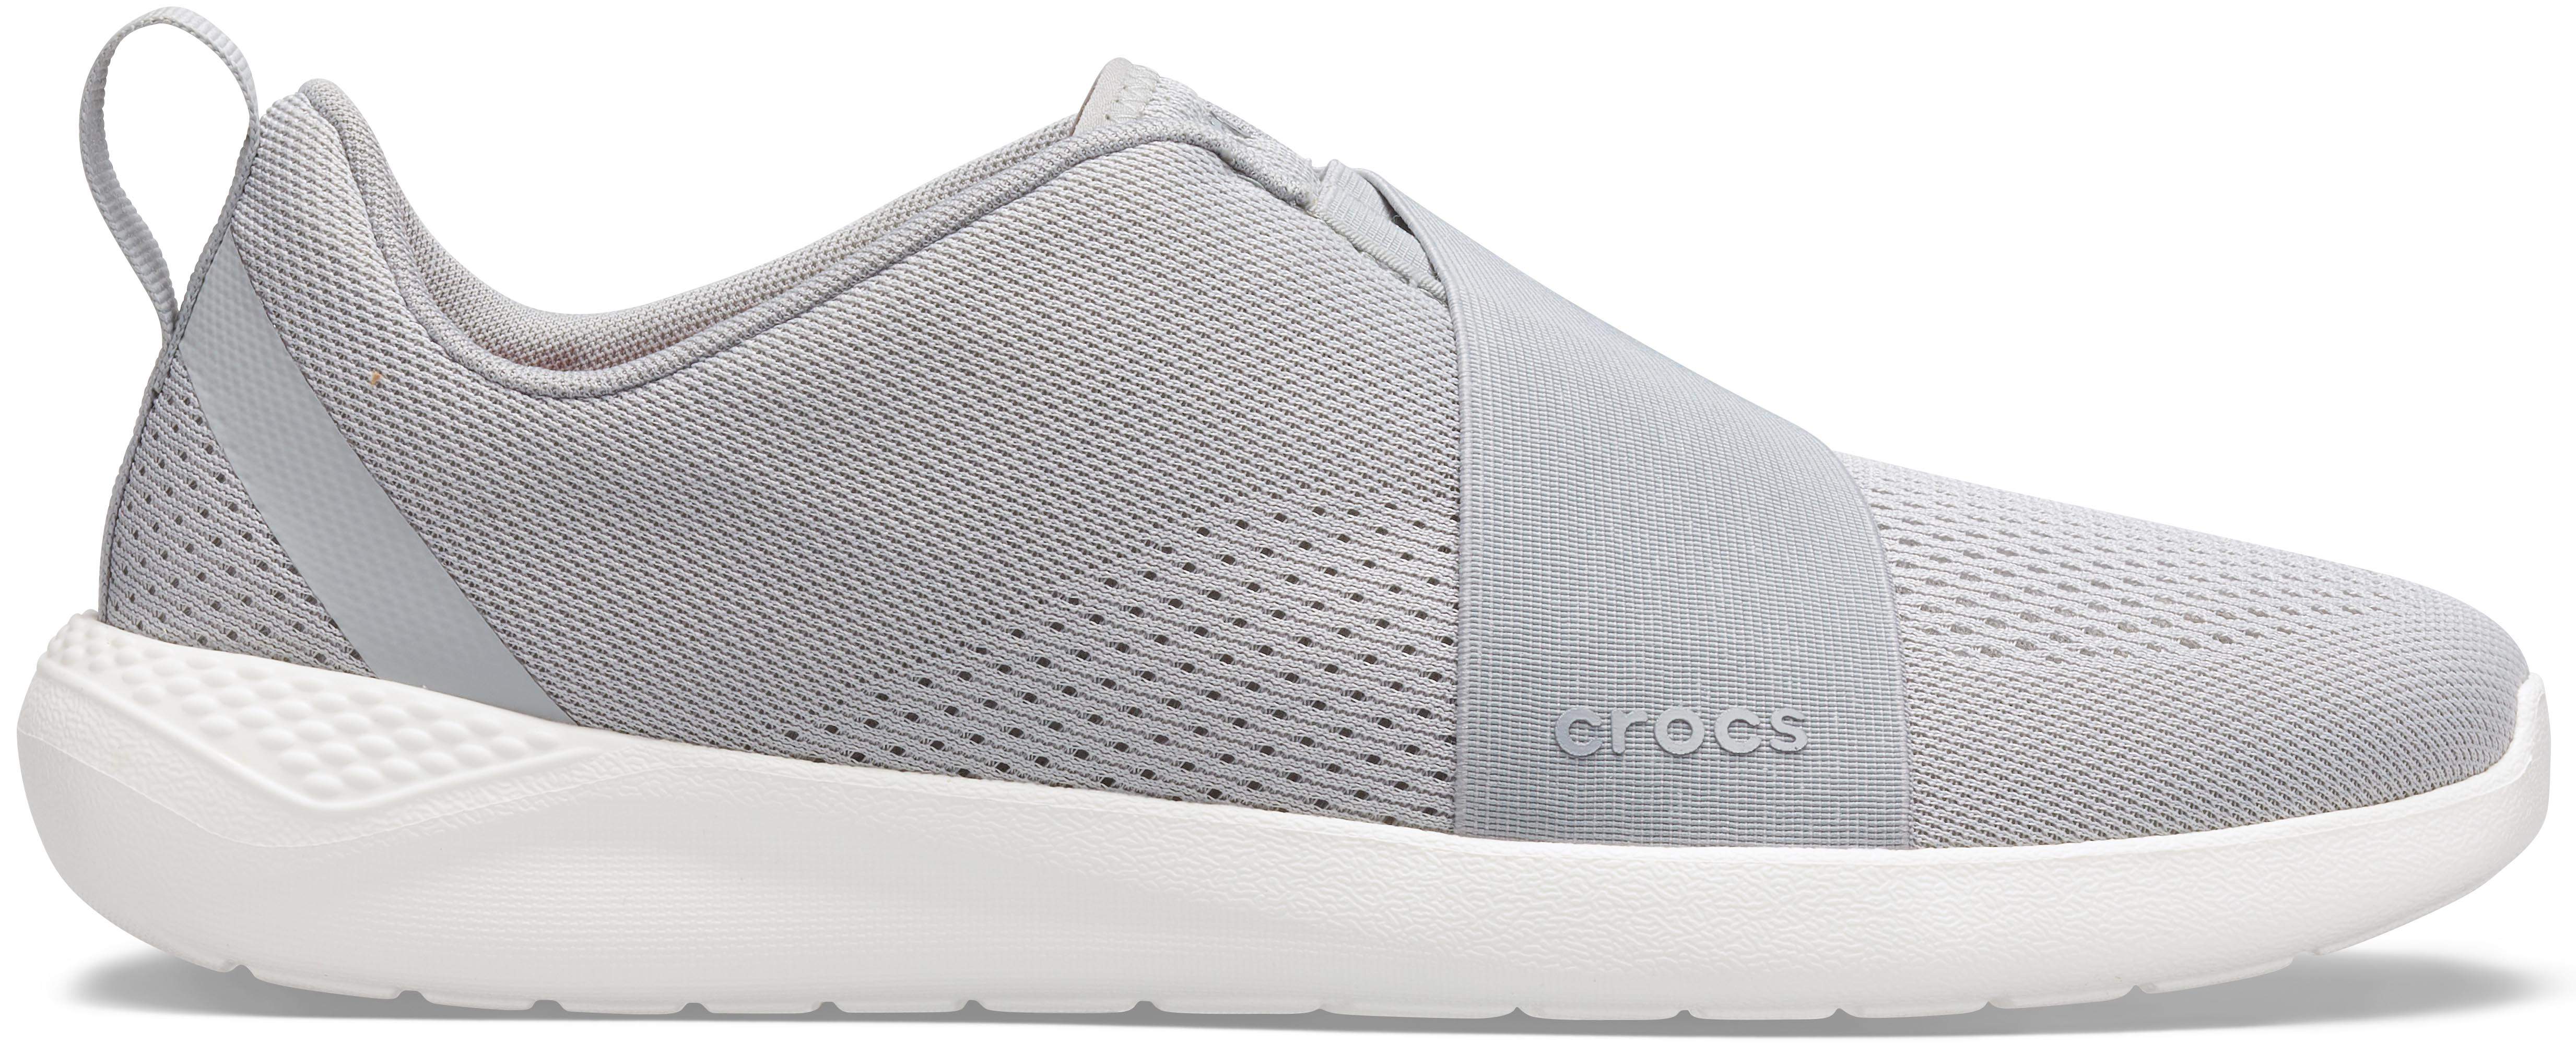 crocs literide sneakers review